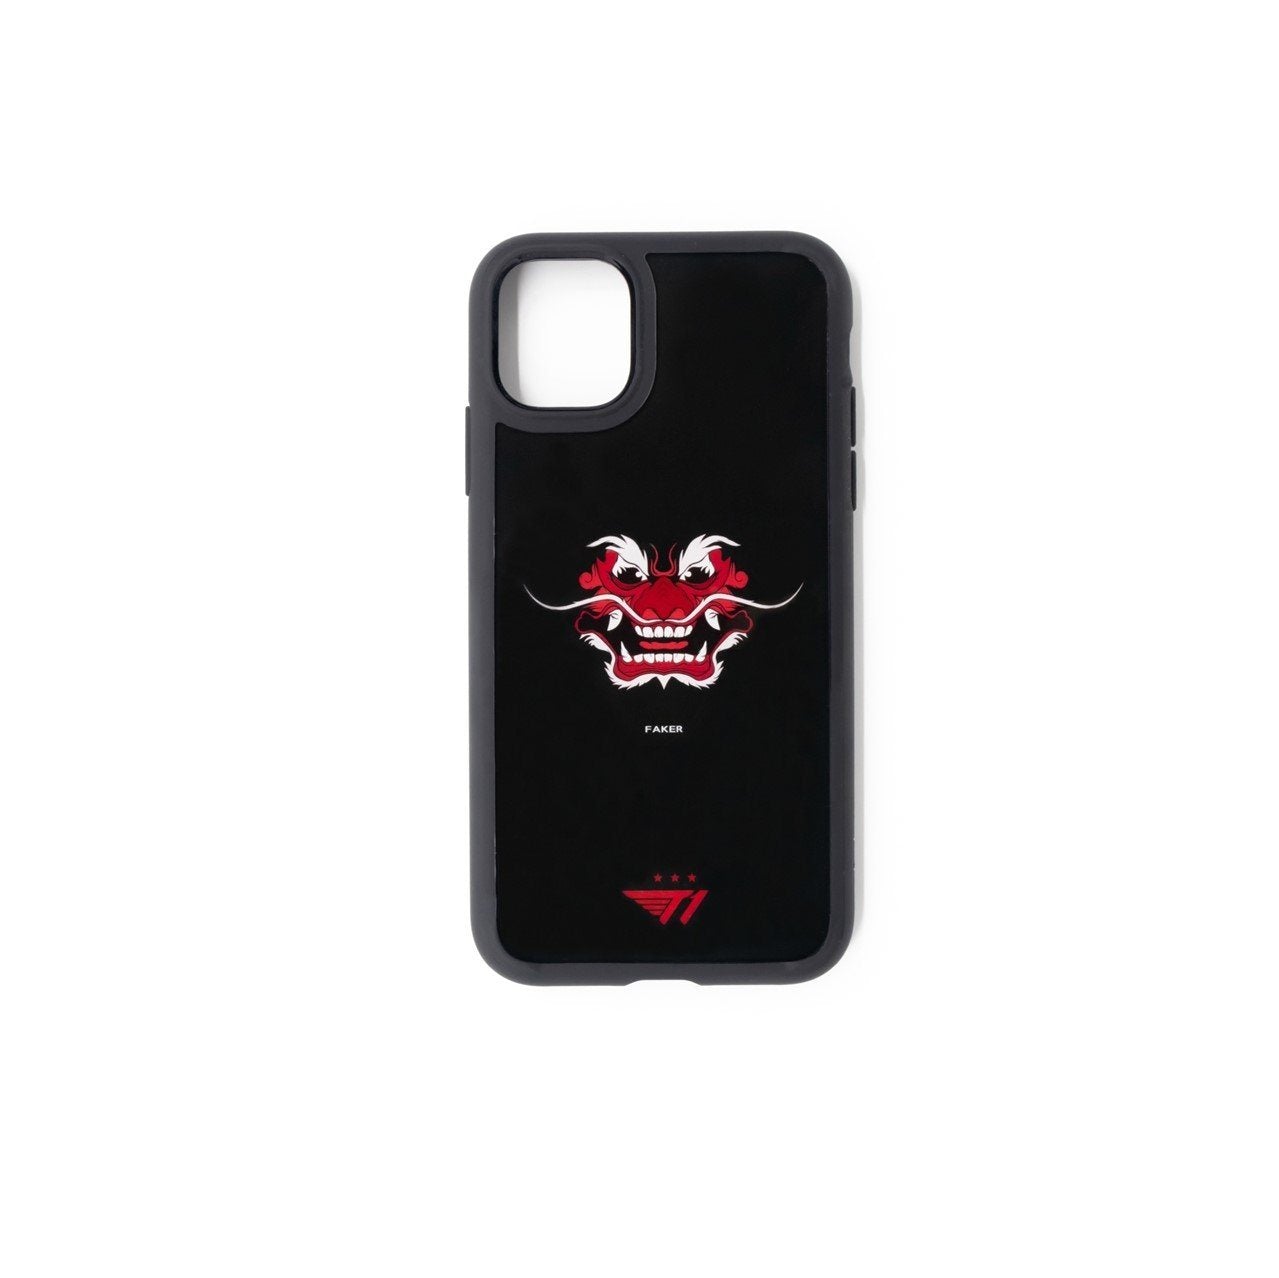 T1 아이폰 11 프로 케이스 - Faker Demon King Edition